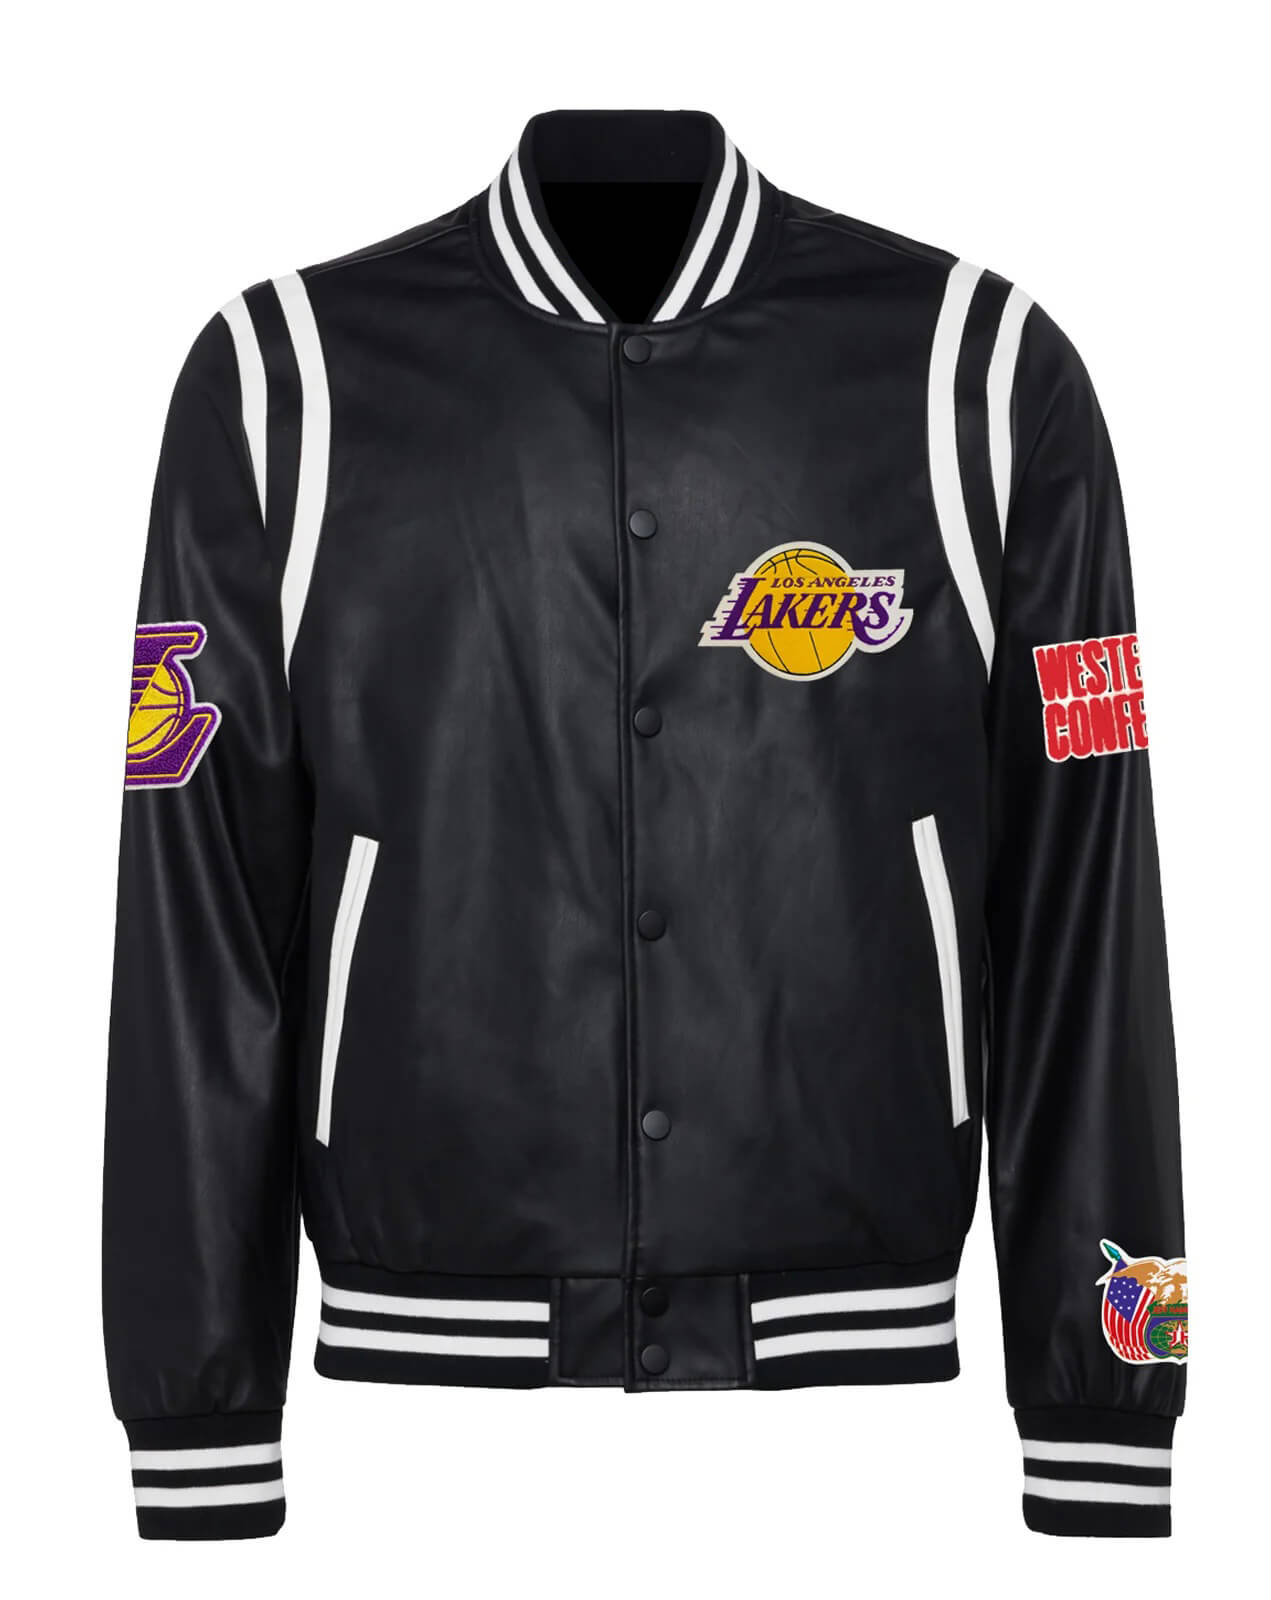 Black and White Wool/Leather NBA LA Lakers Varsity Jacket - Jackets Expert